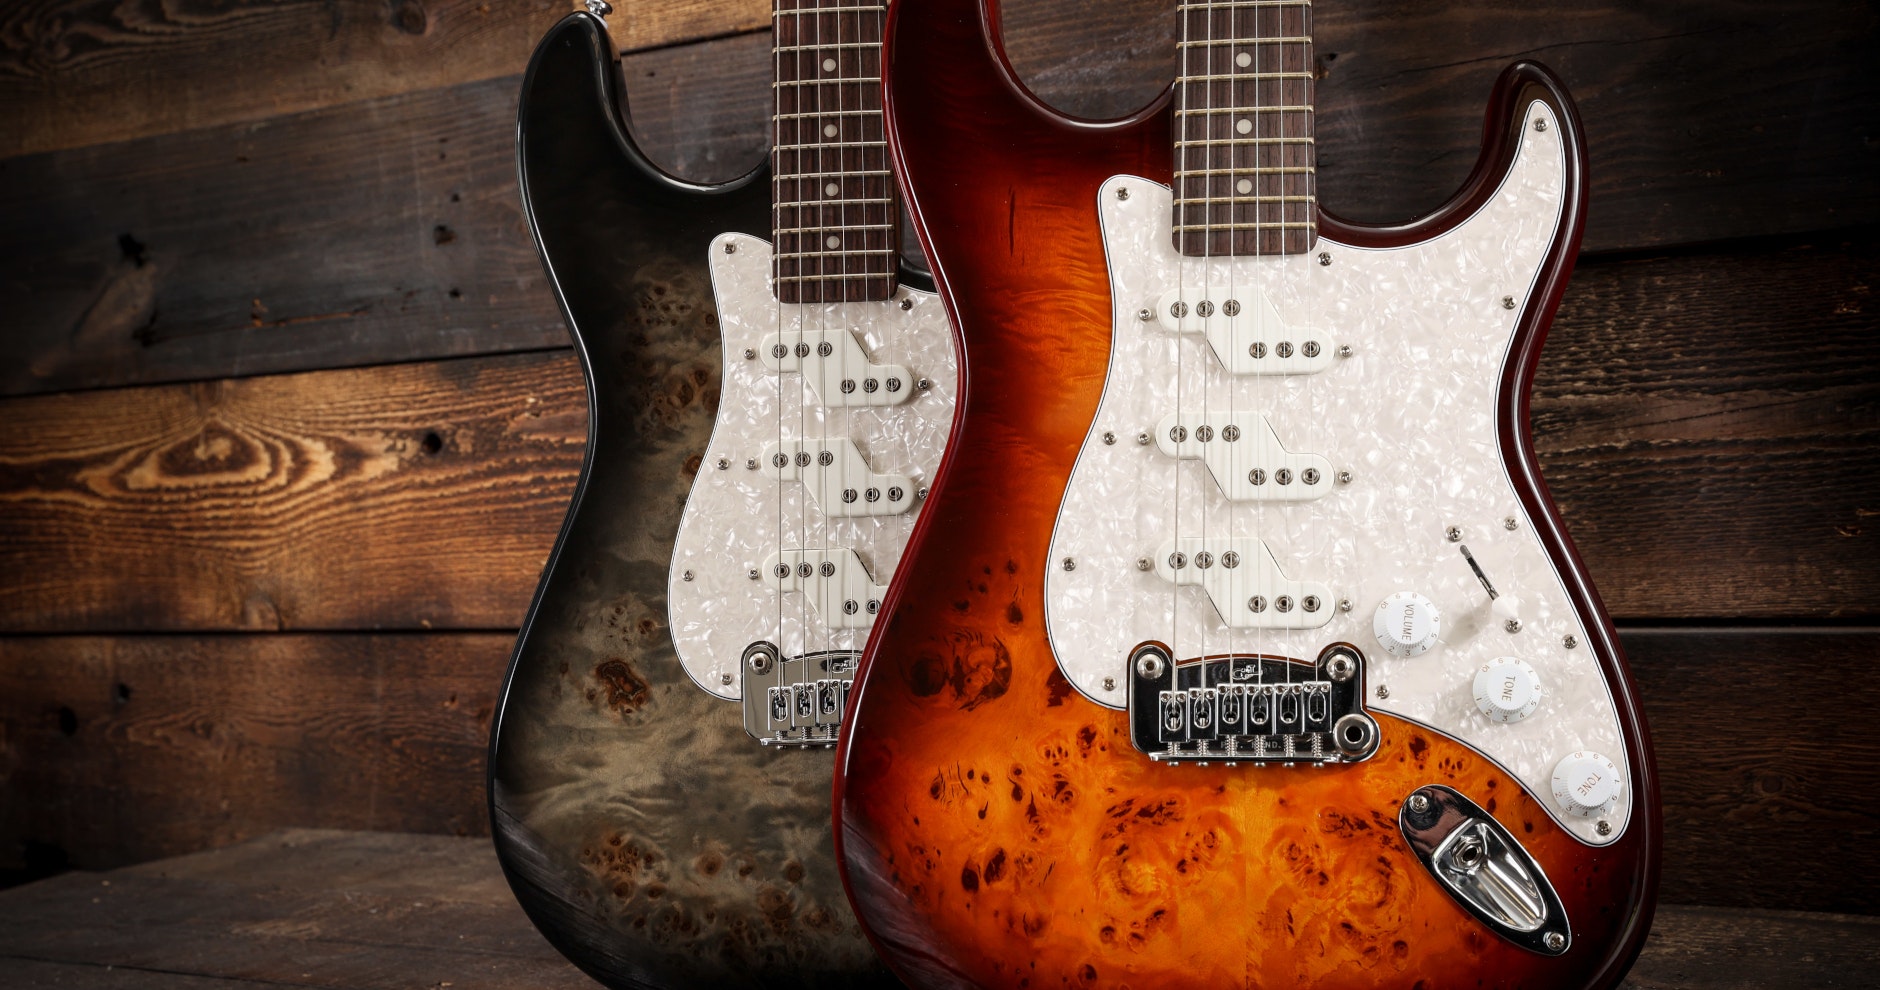 GL MFD Pickups - Leo Fender's Greatest Innovation? - Andertons Blog